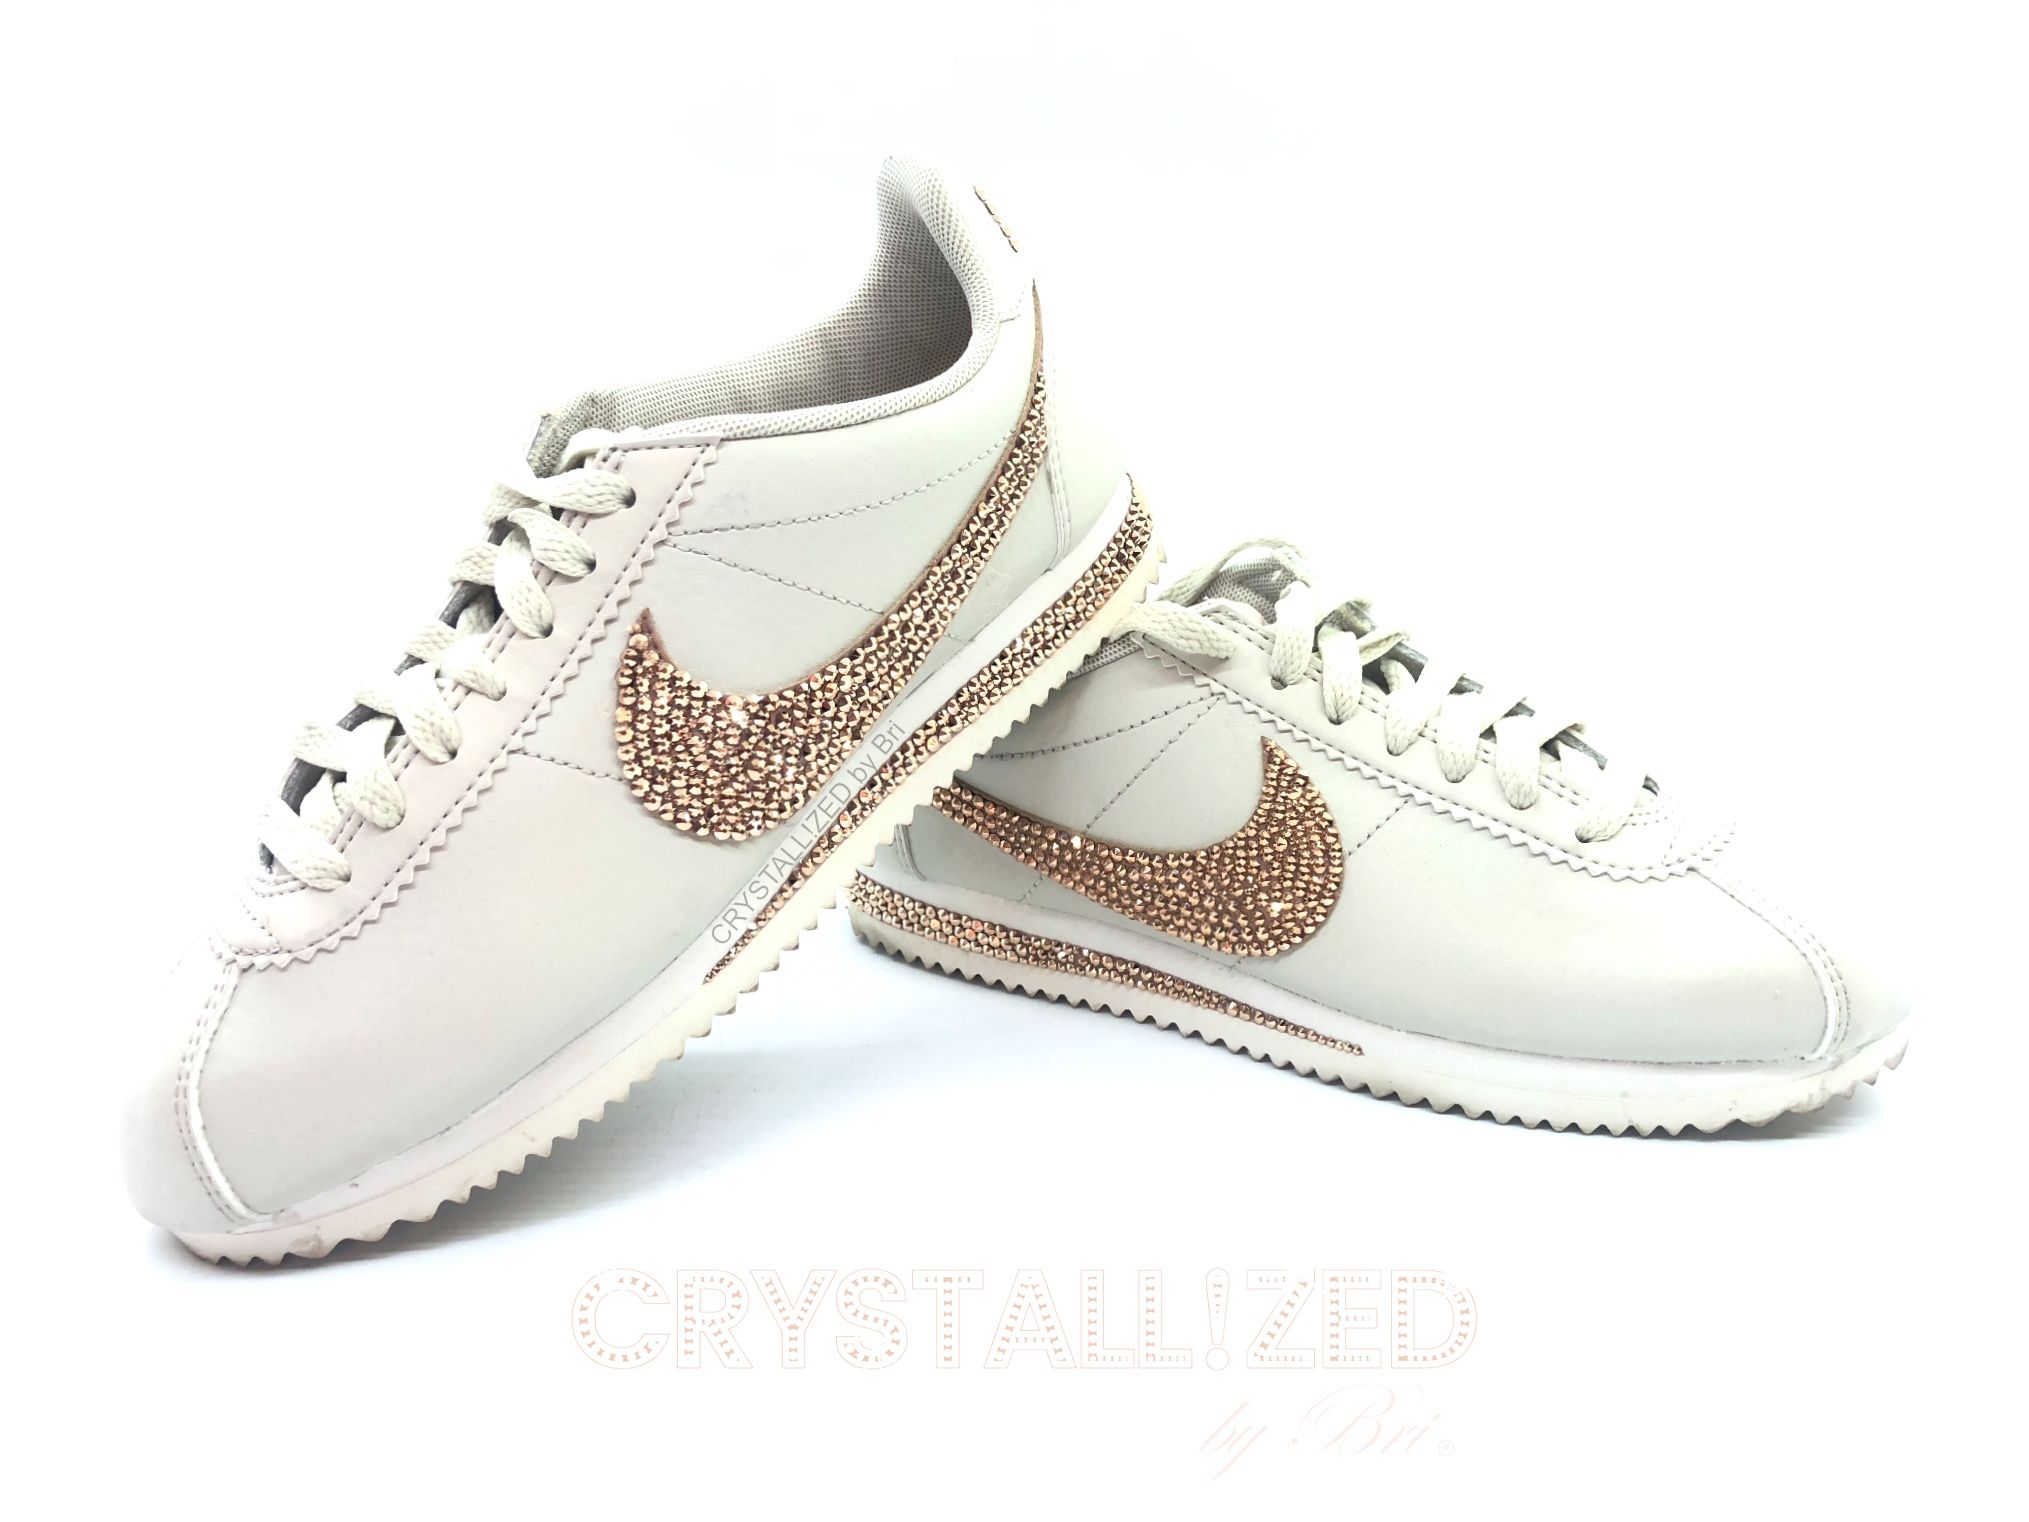 Buy Custom Nike Crystallized Classic Cortez Women's Sneakers Bling